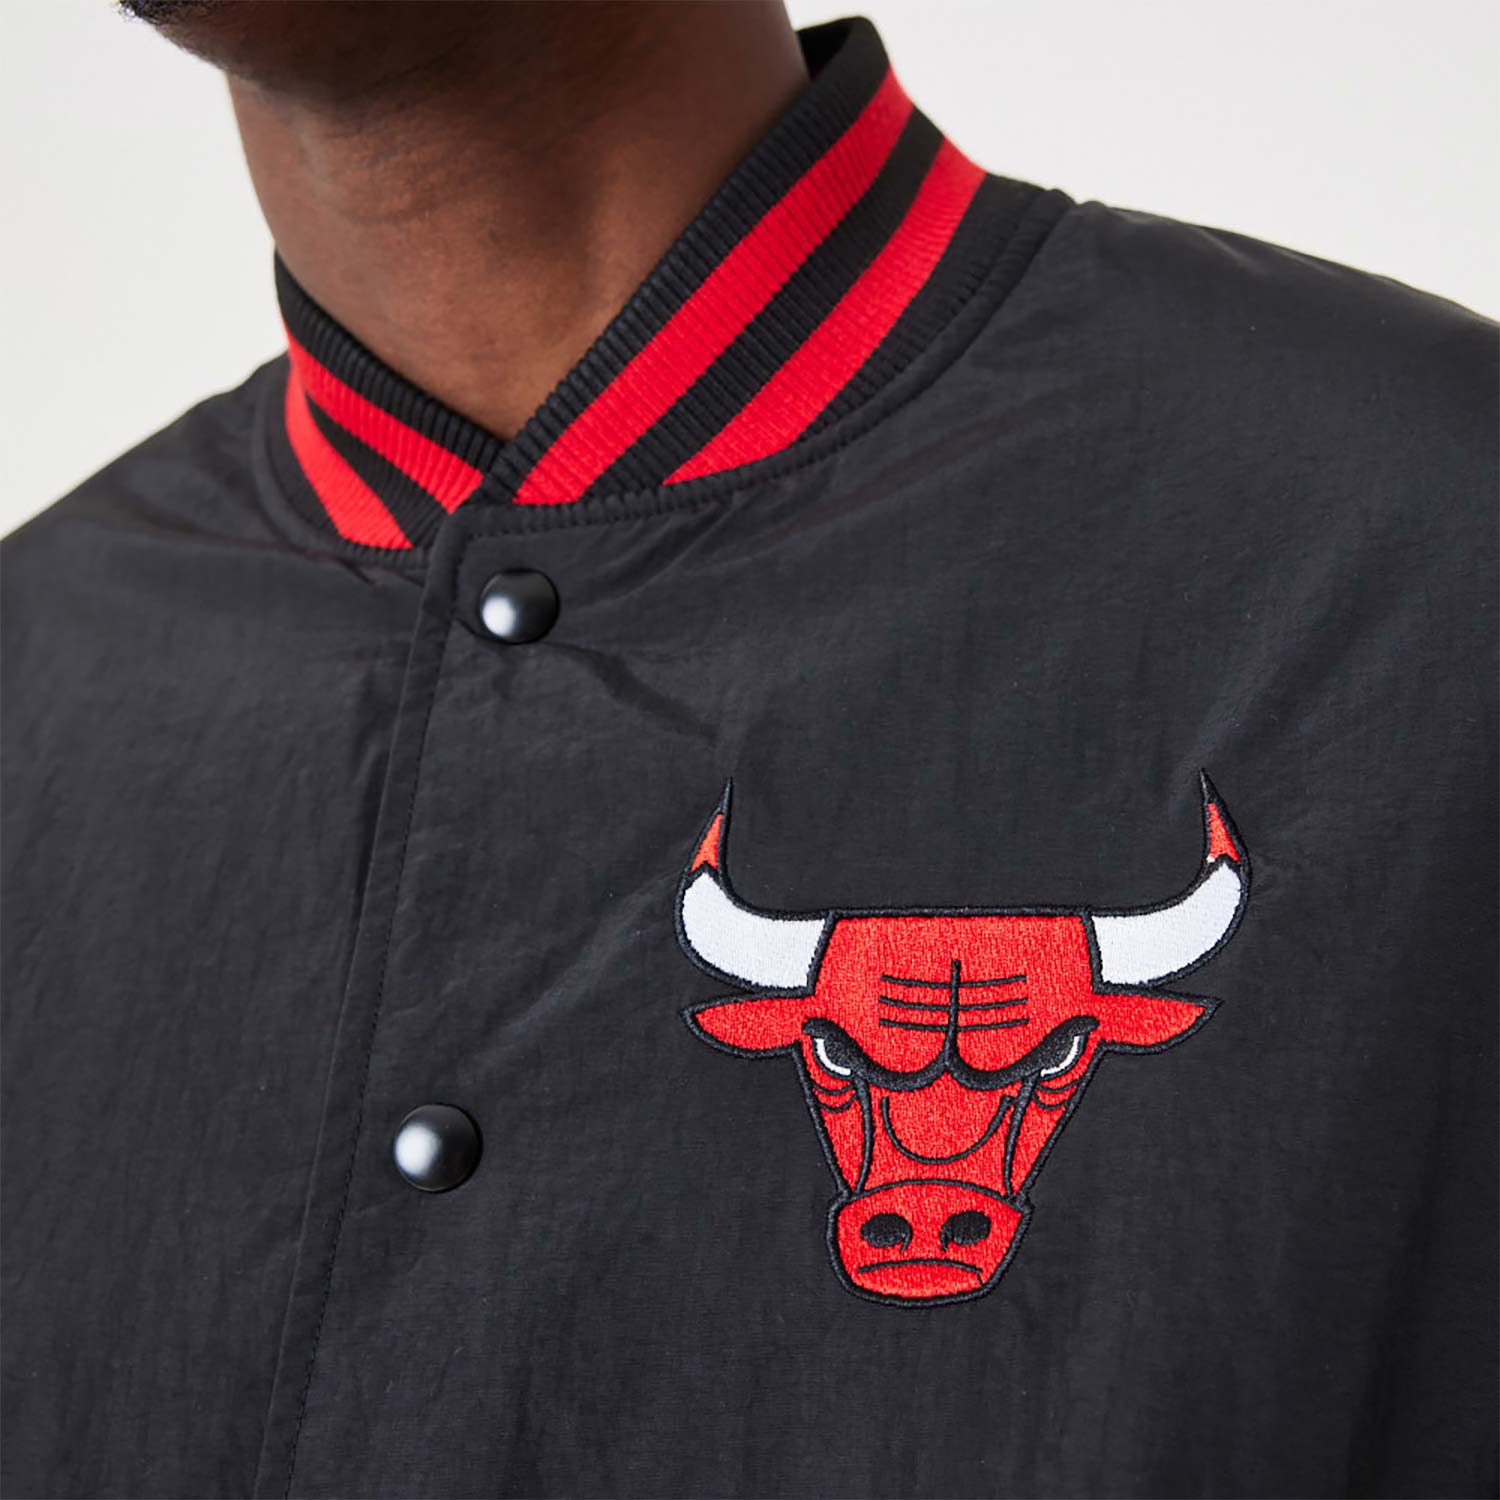 Chicago Bulls NBA Script Black Bomber Jacket